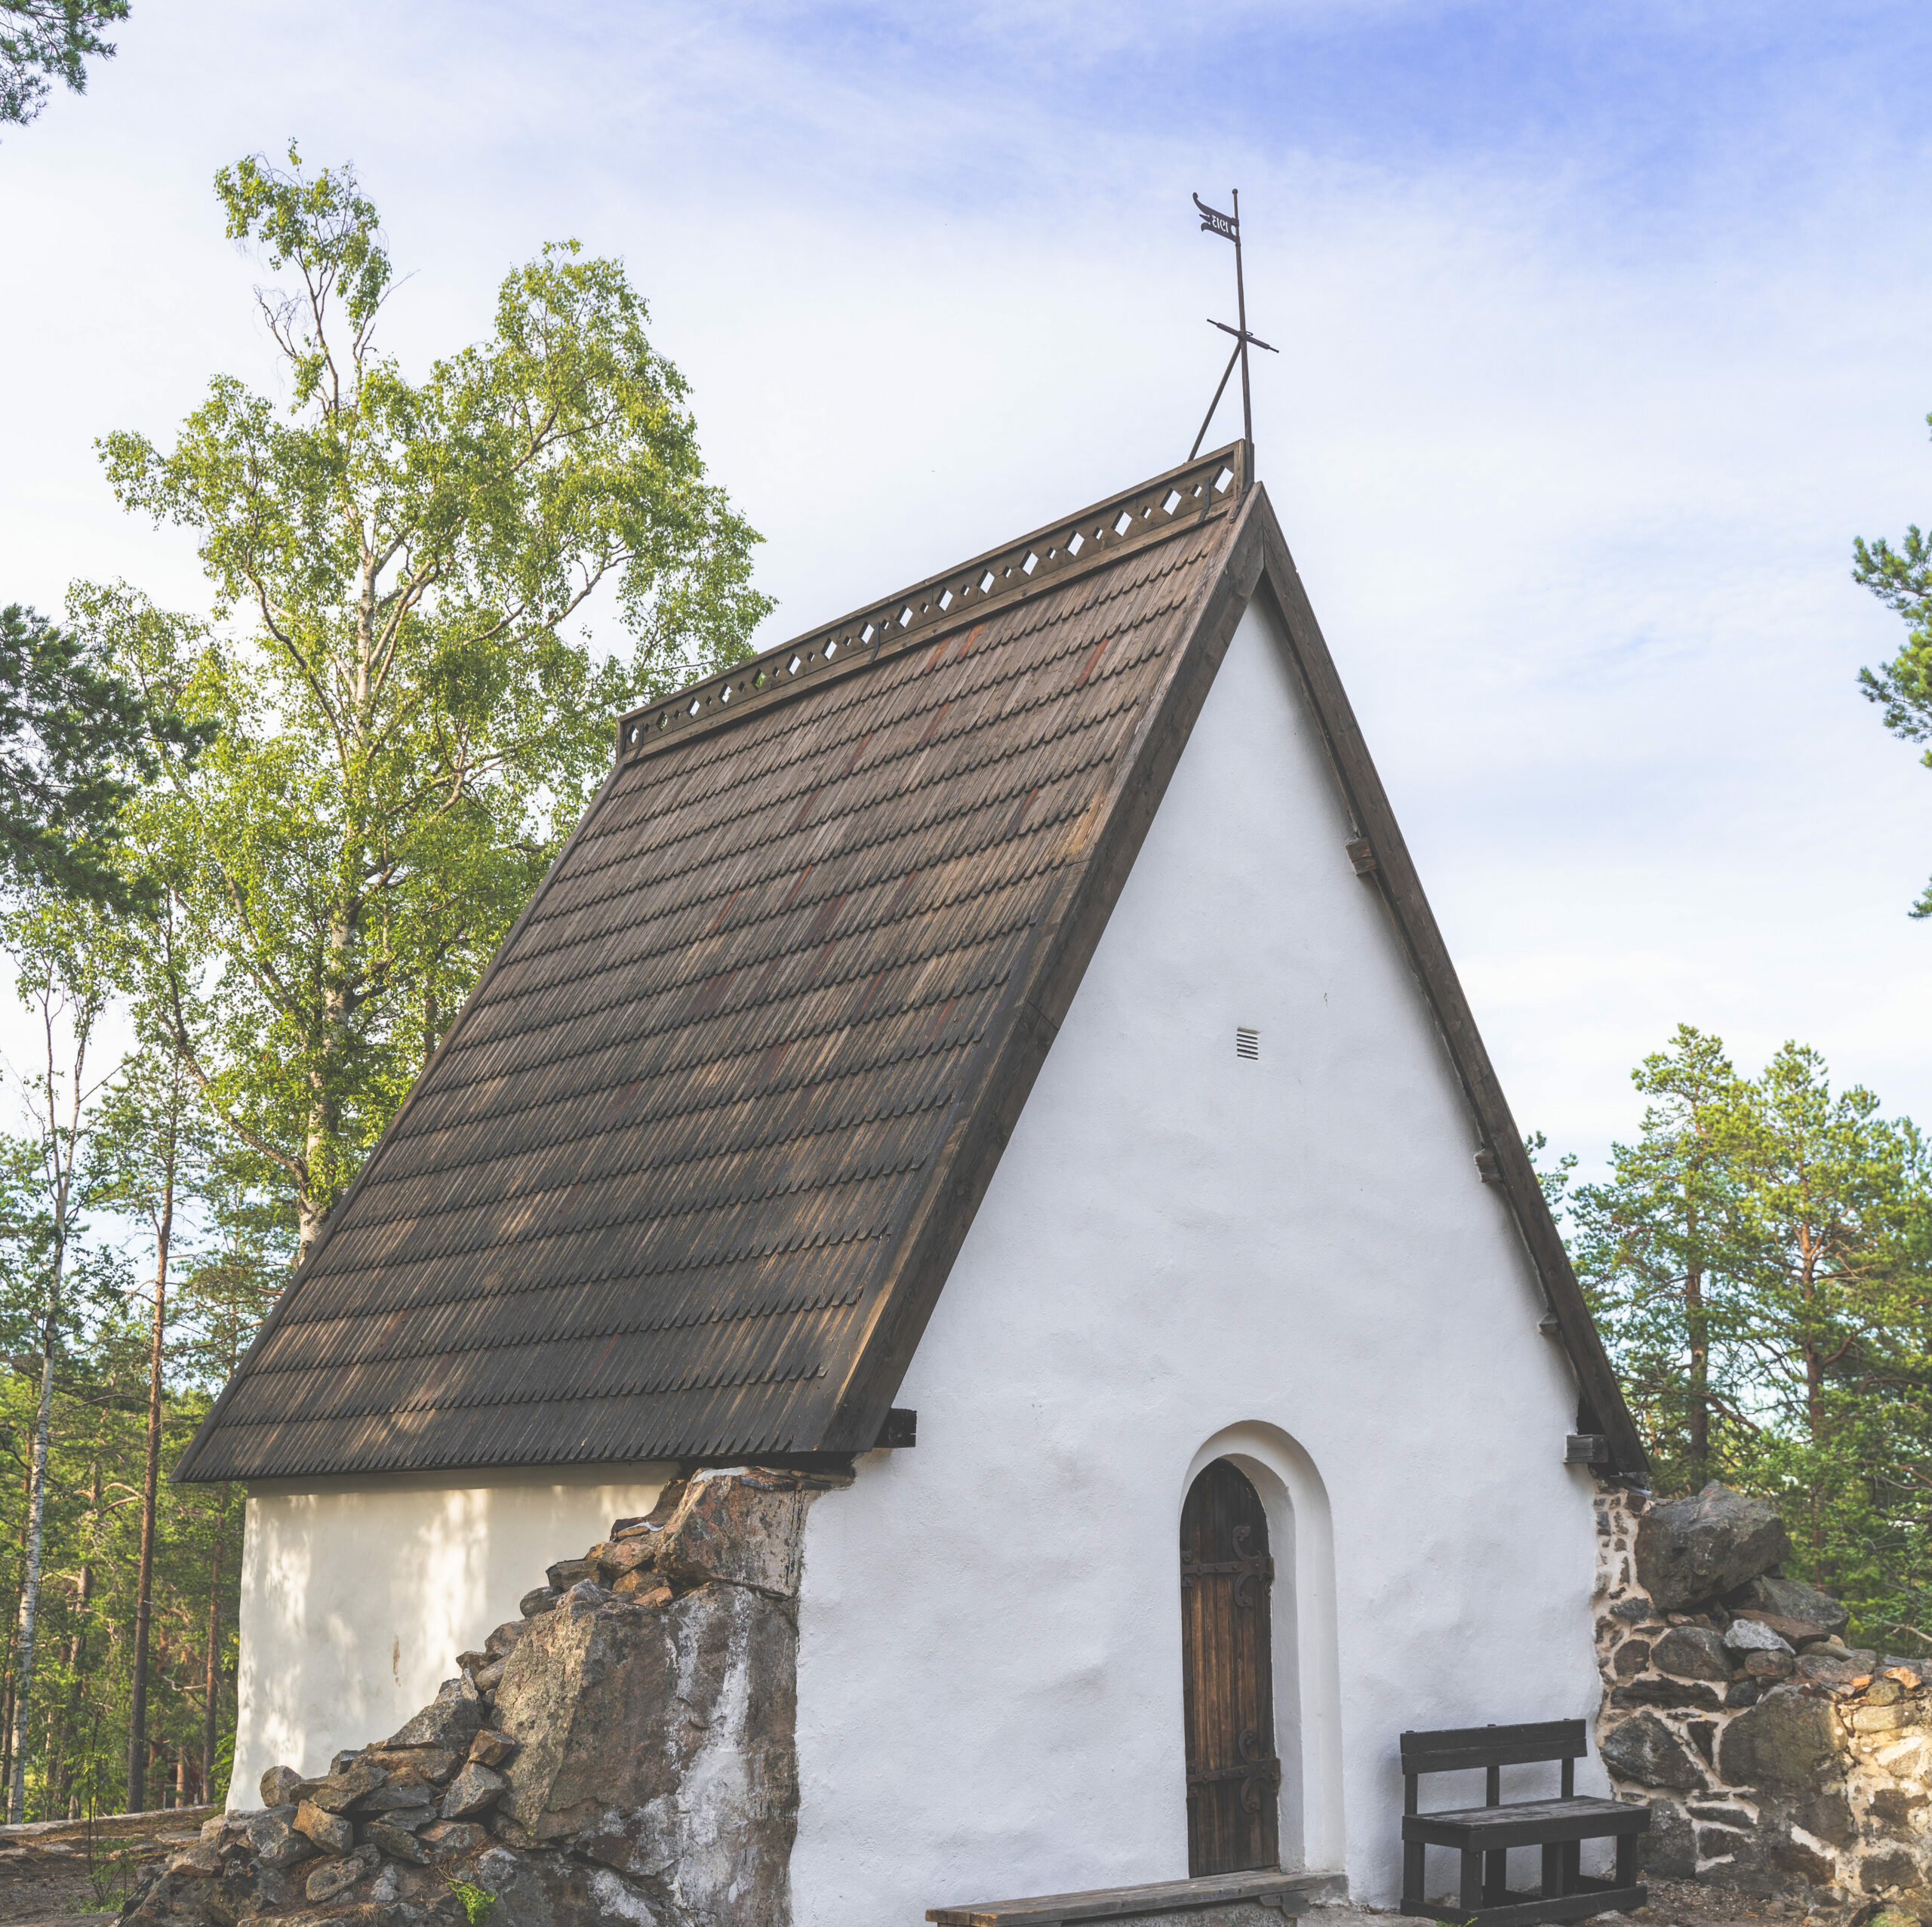 Norra Berget’s small chapel